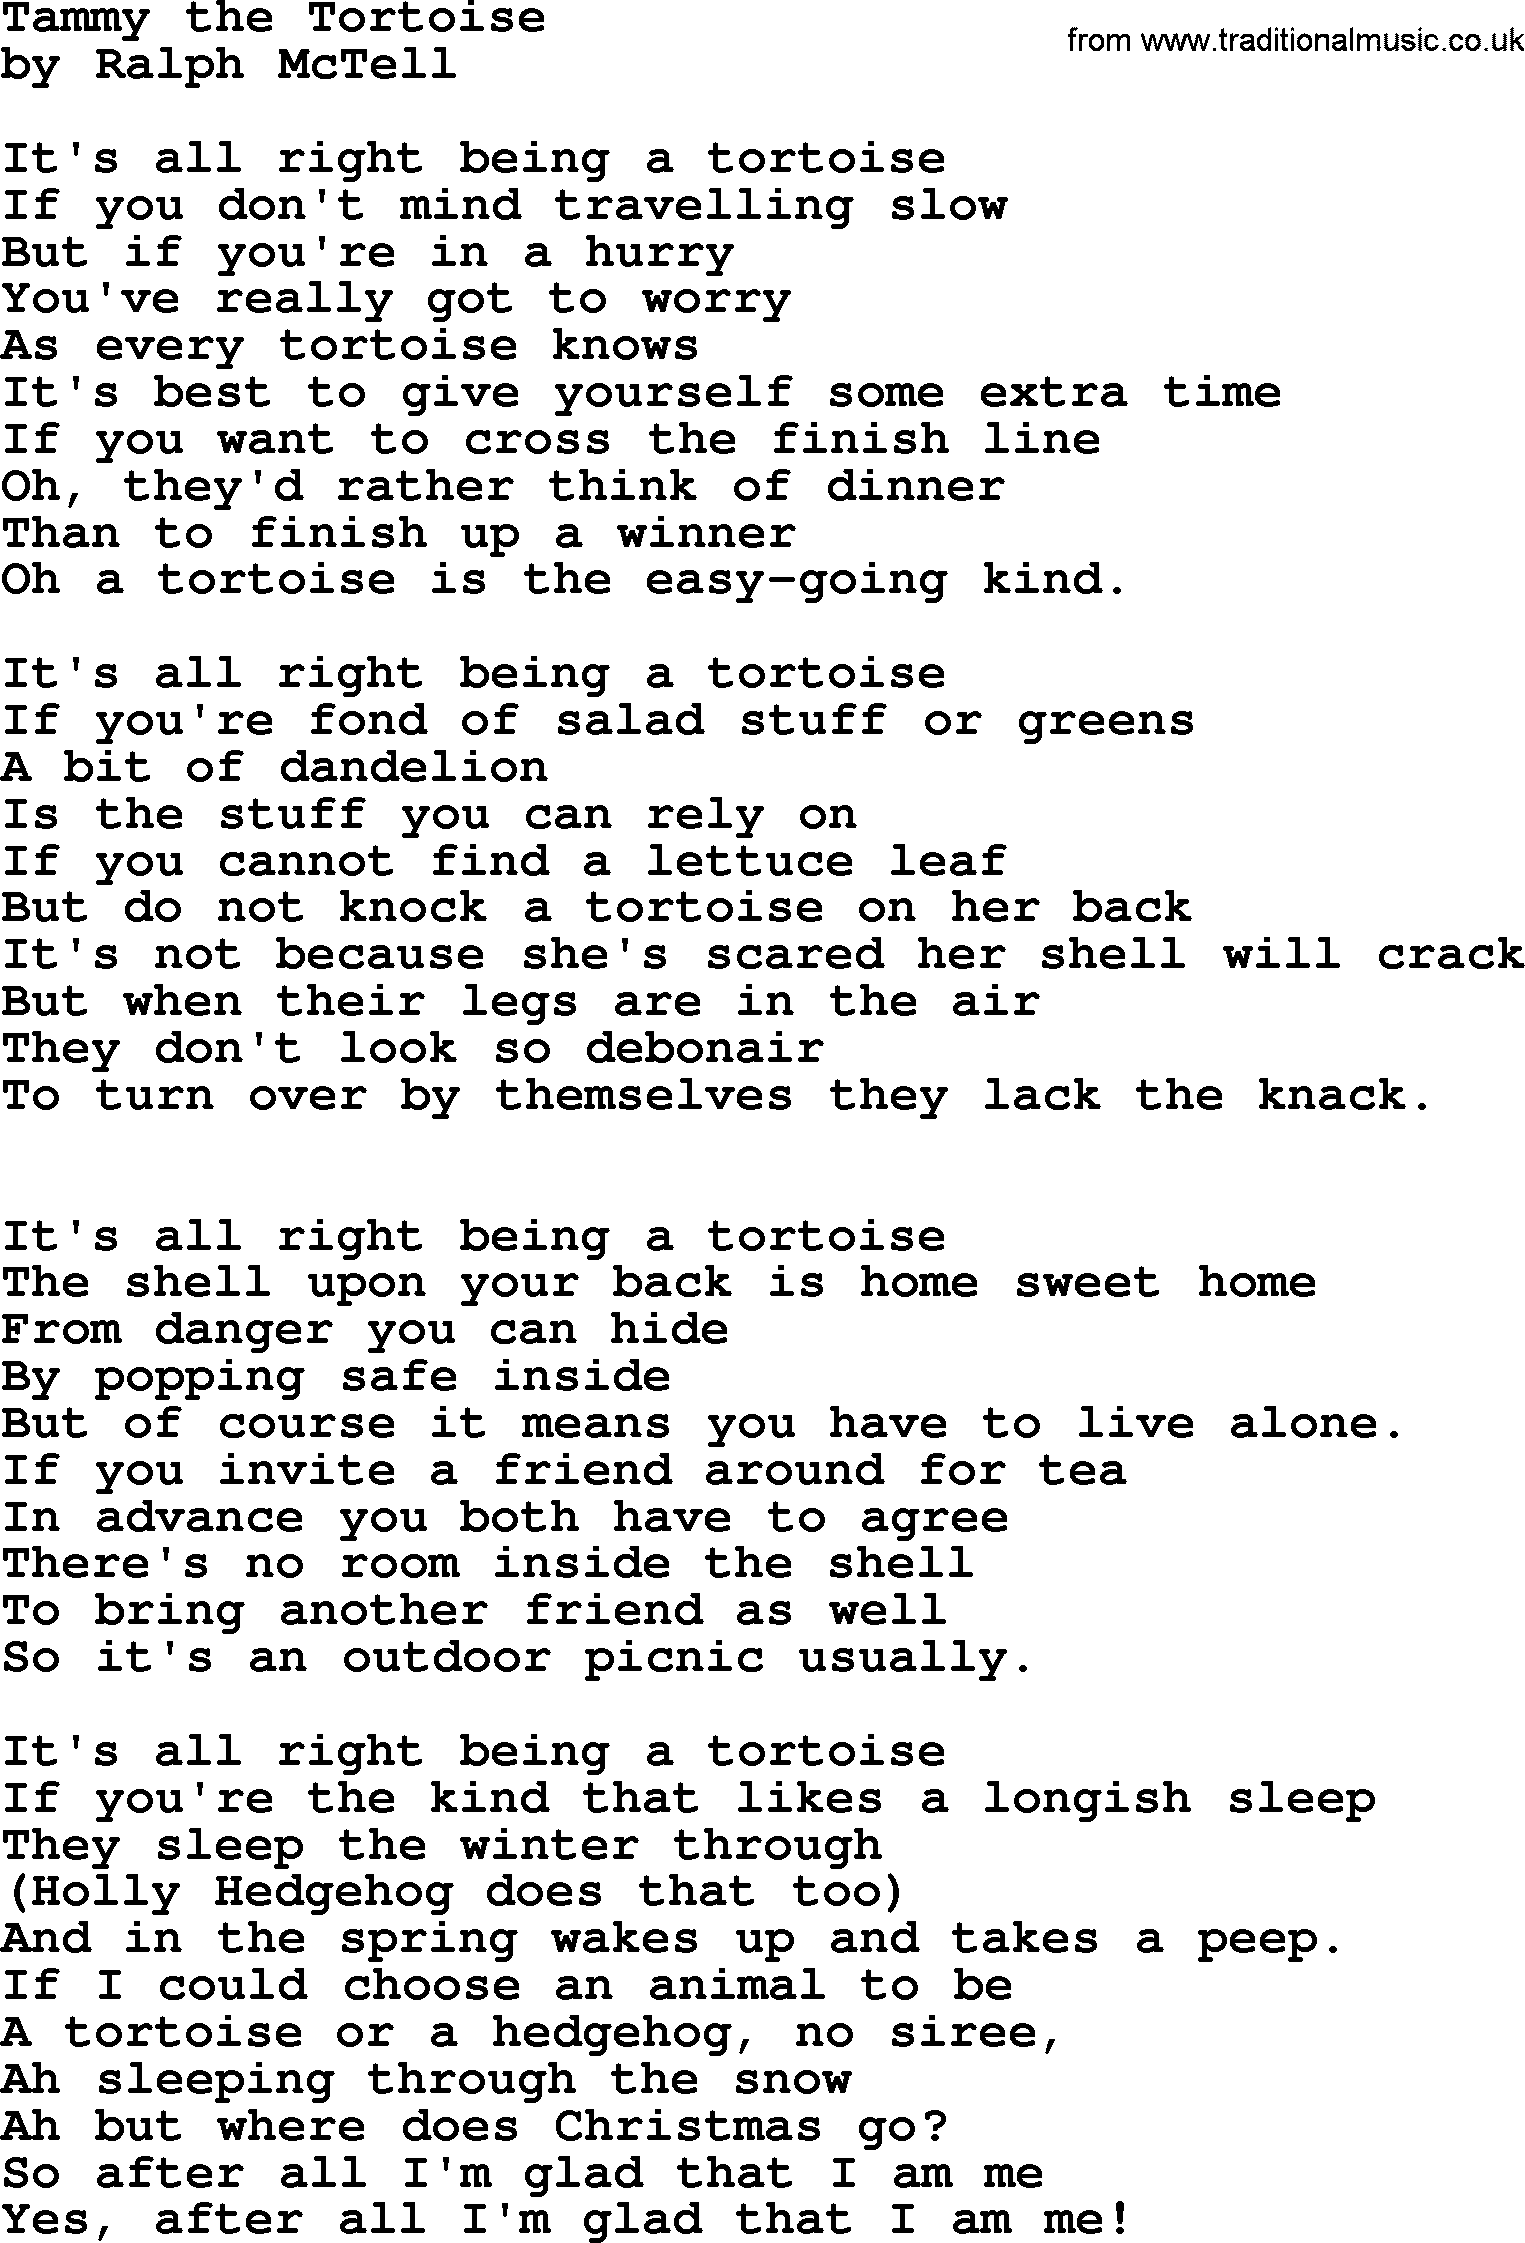 Ralph McTell Song: Tammy The Tortoise, lyrics